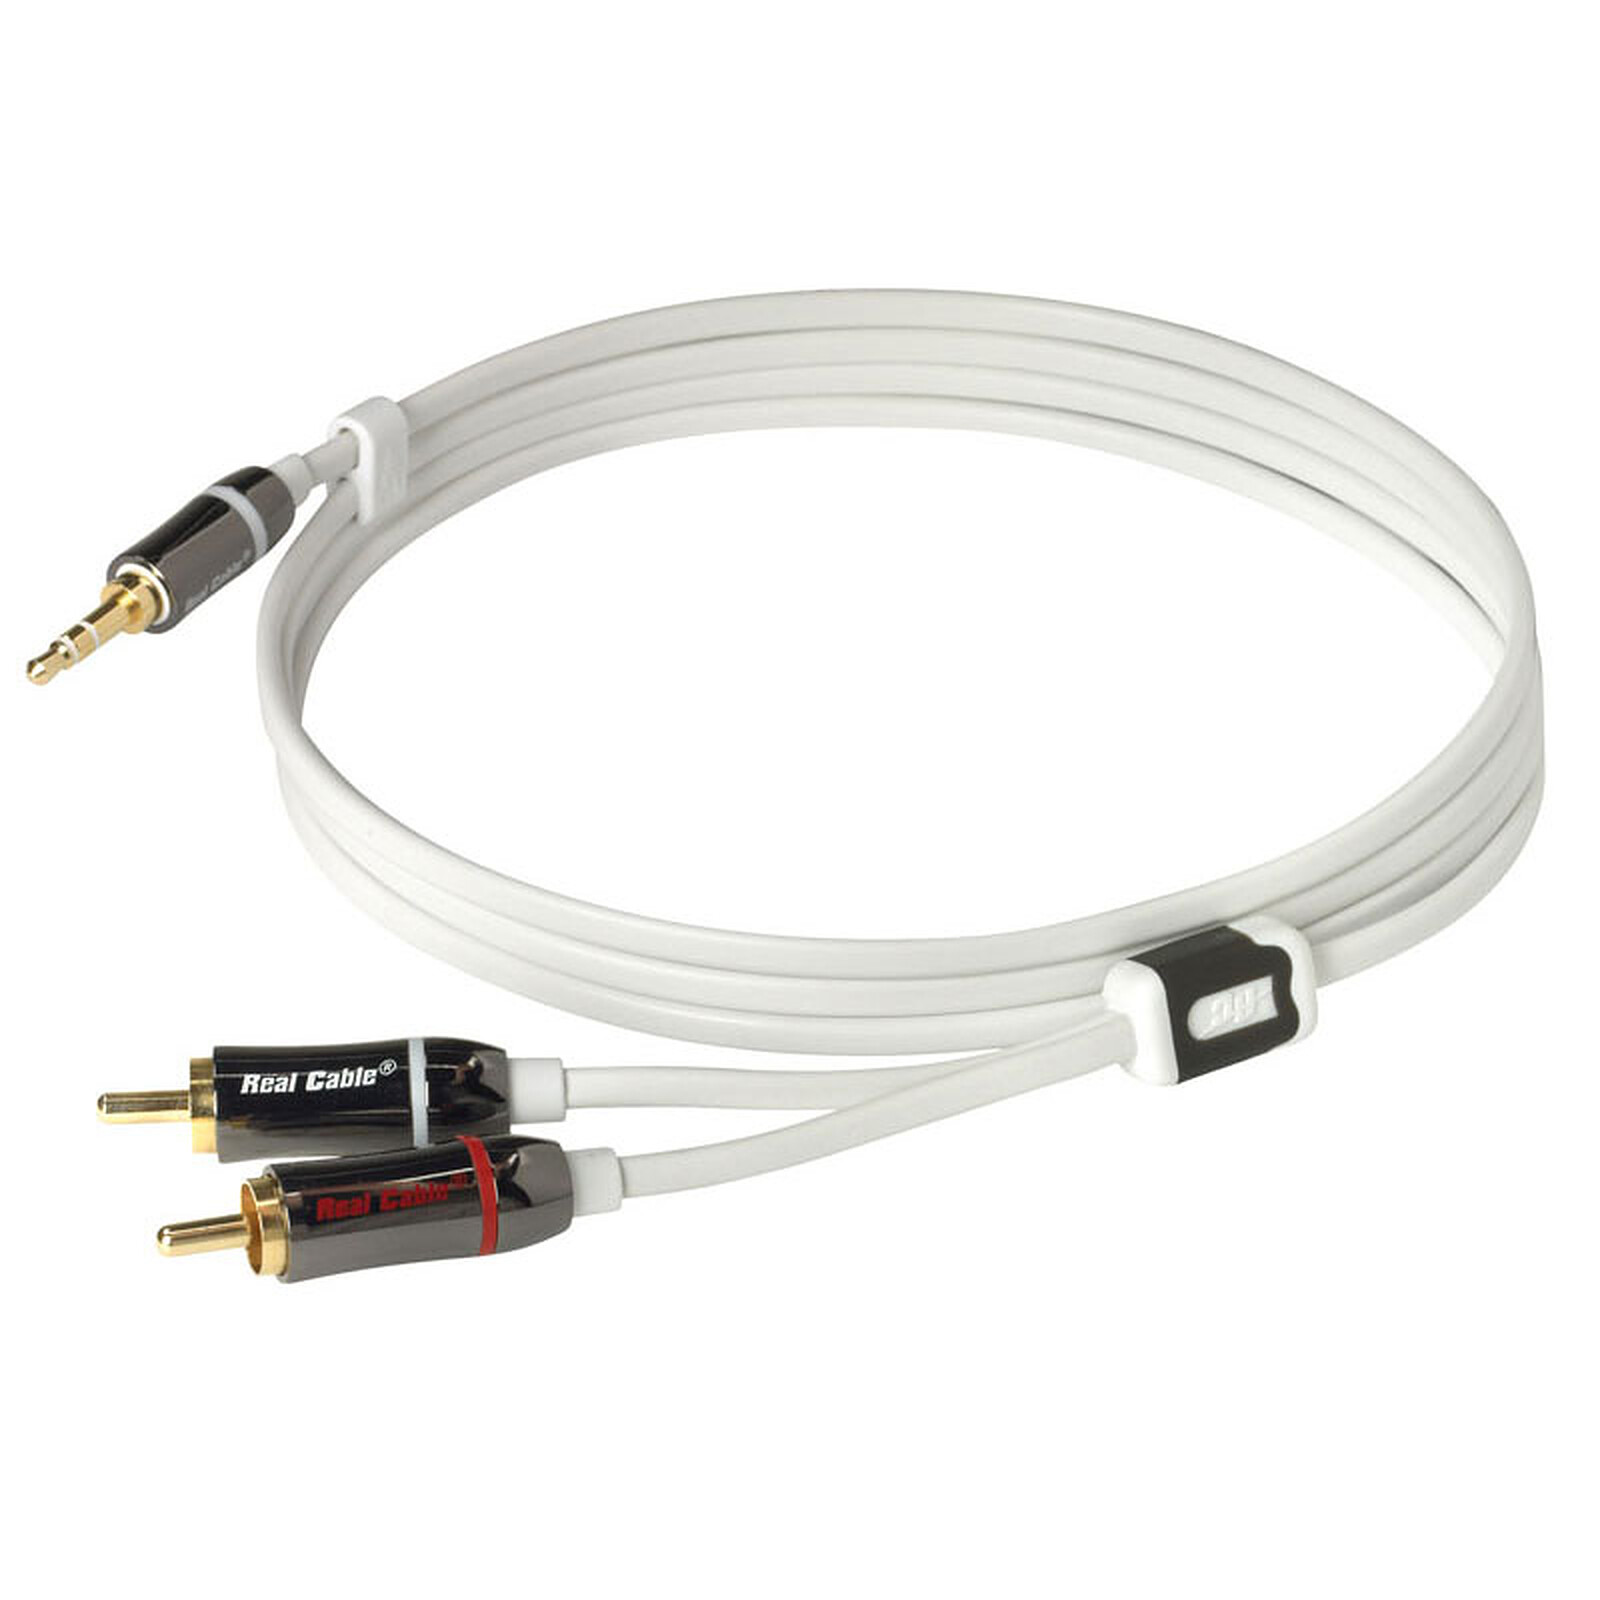 Real Cable iPlug J35M2M 3m - Adaptateur audio - Garantie 3 ans LDLC